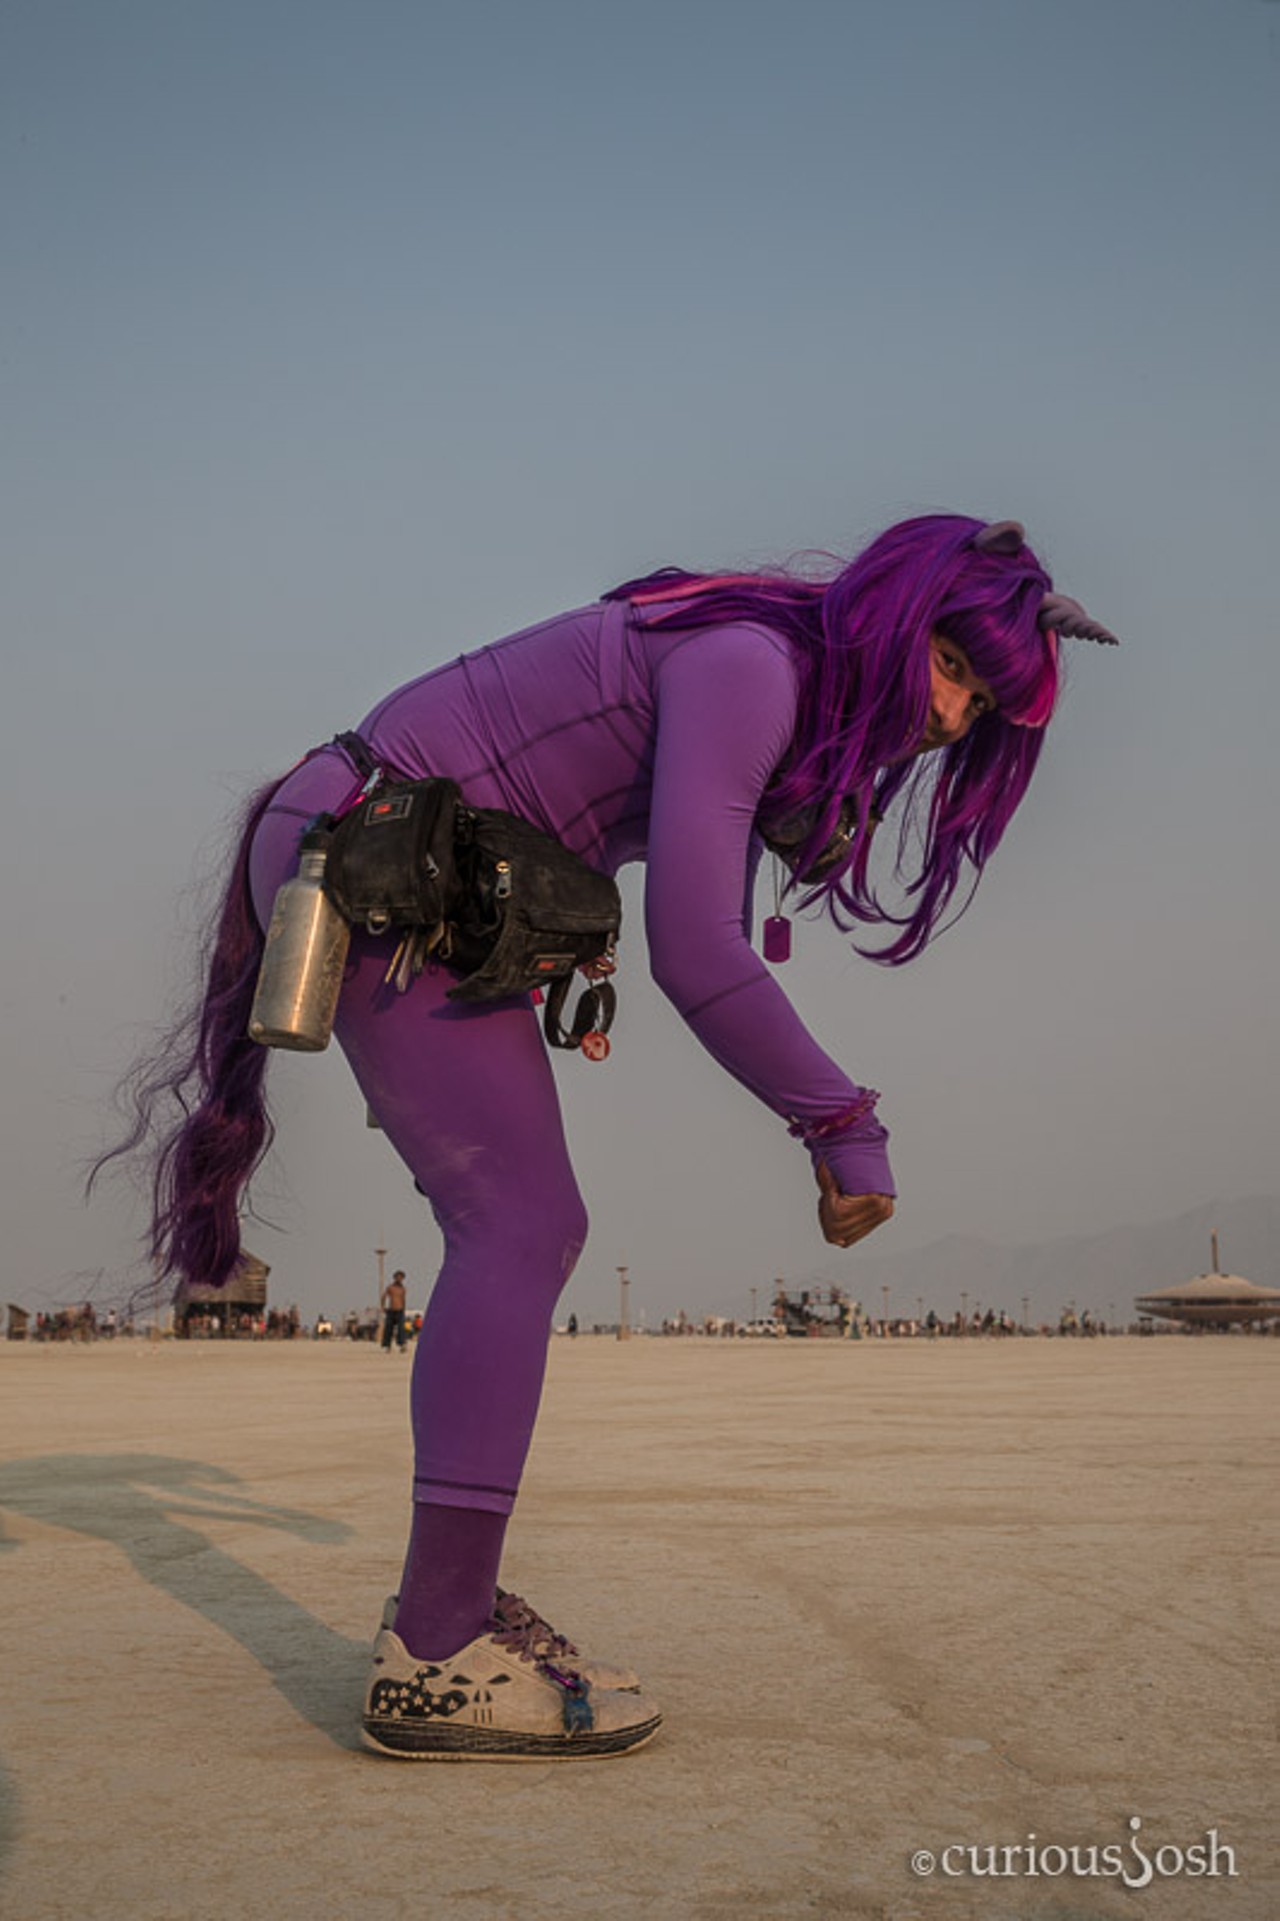 CuriousJosh: The People of Burning Man 2013